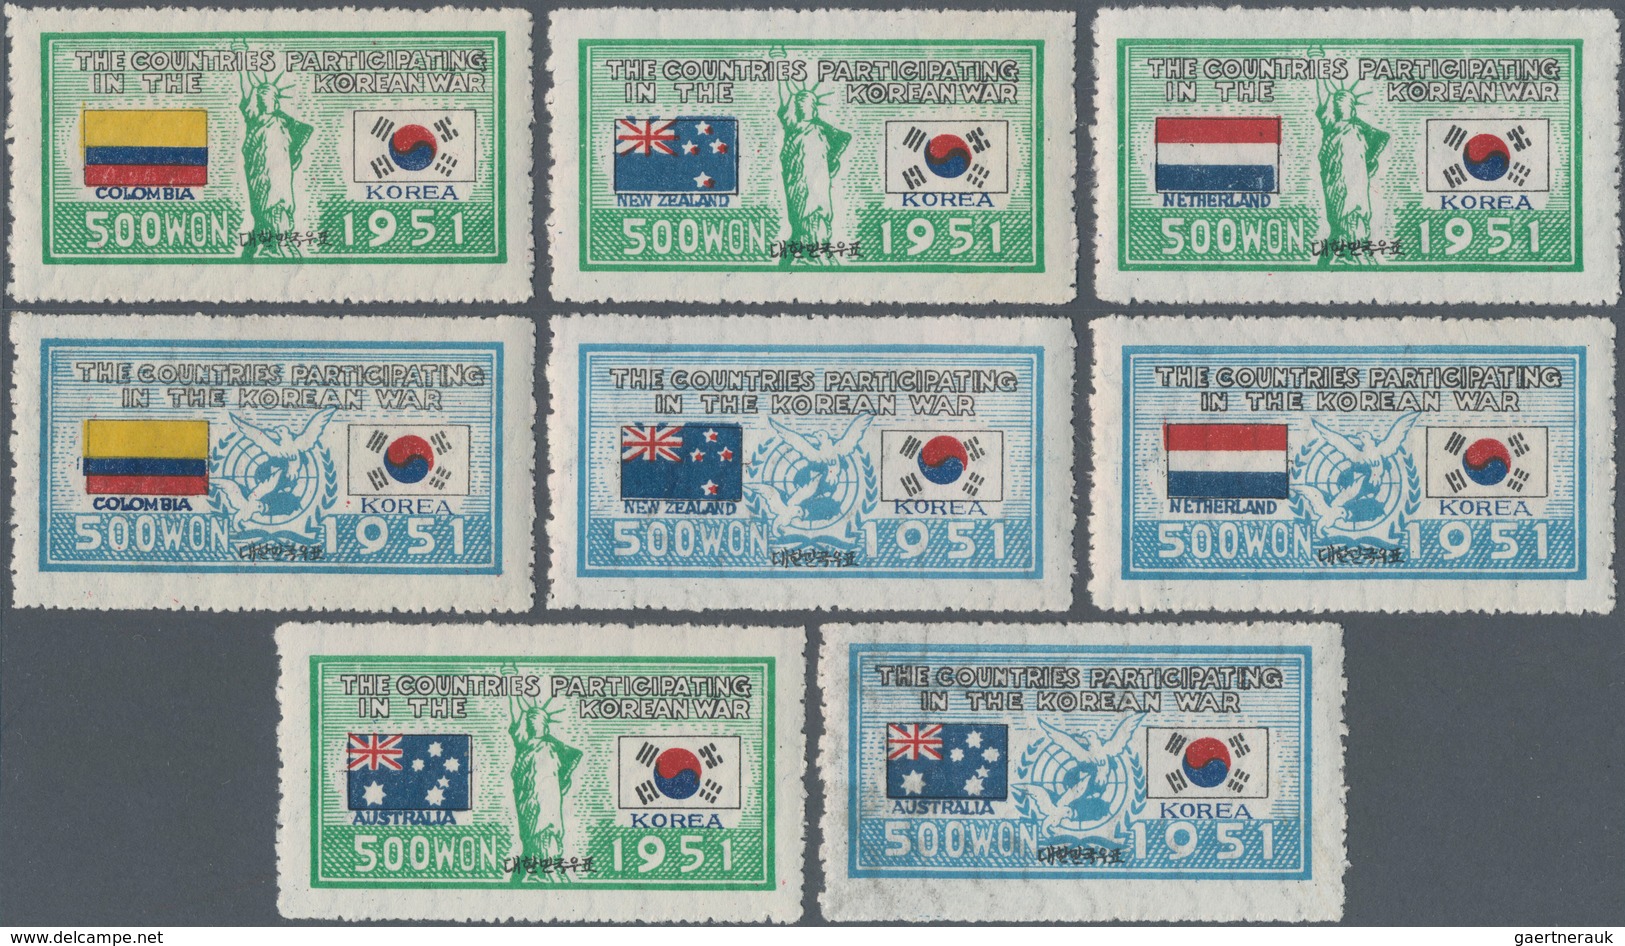 Korea-Süd: 1951/52, flags set, inc. Italy I+II, unused mounted mint first mount LH (Michel cat. 1300